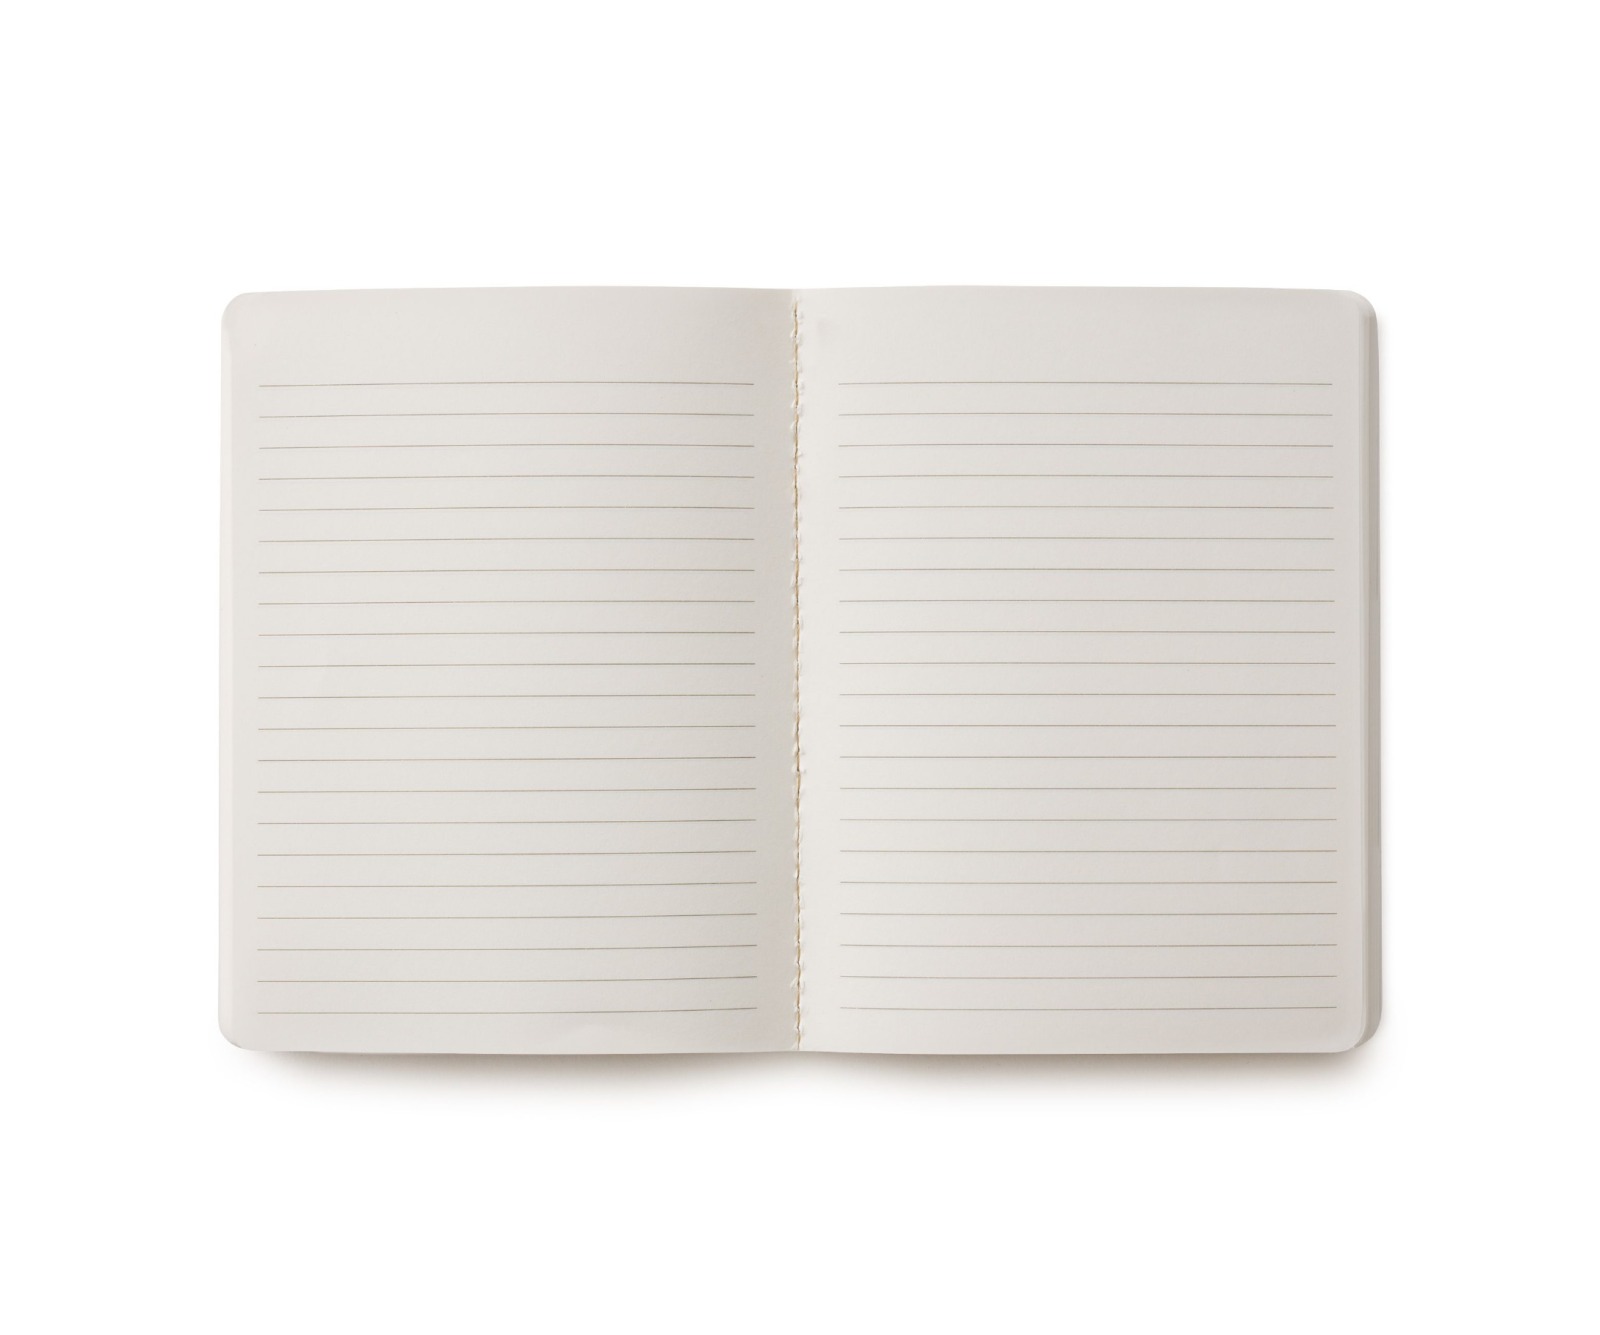 Estee Pocket Notebooks Boxed Set 16